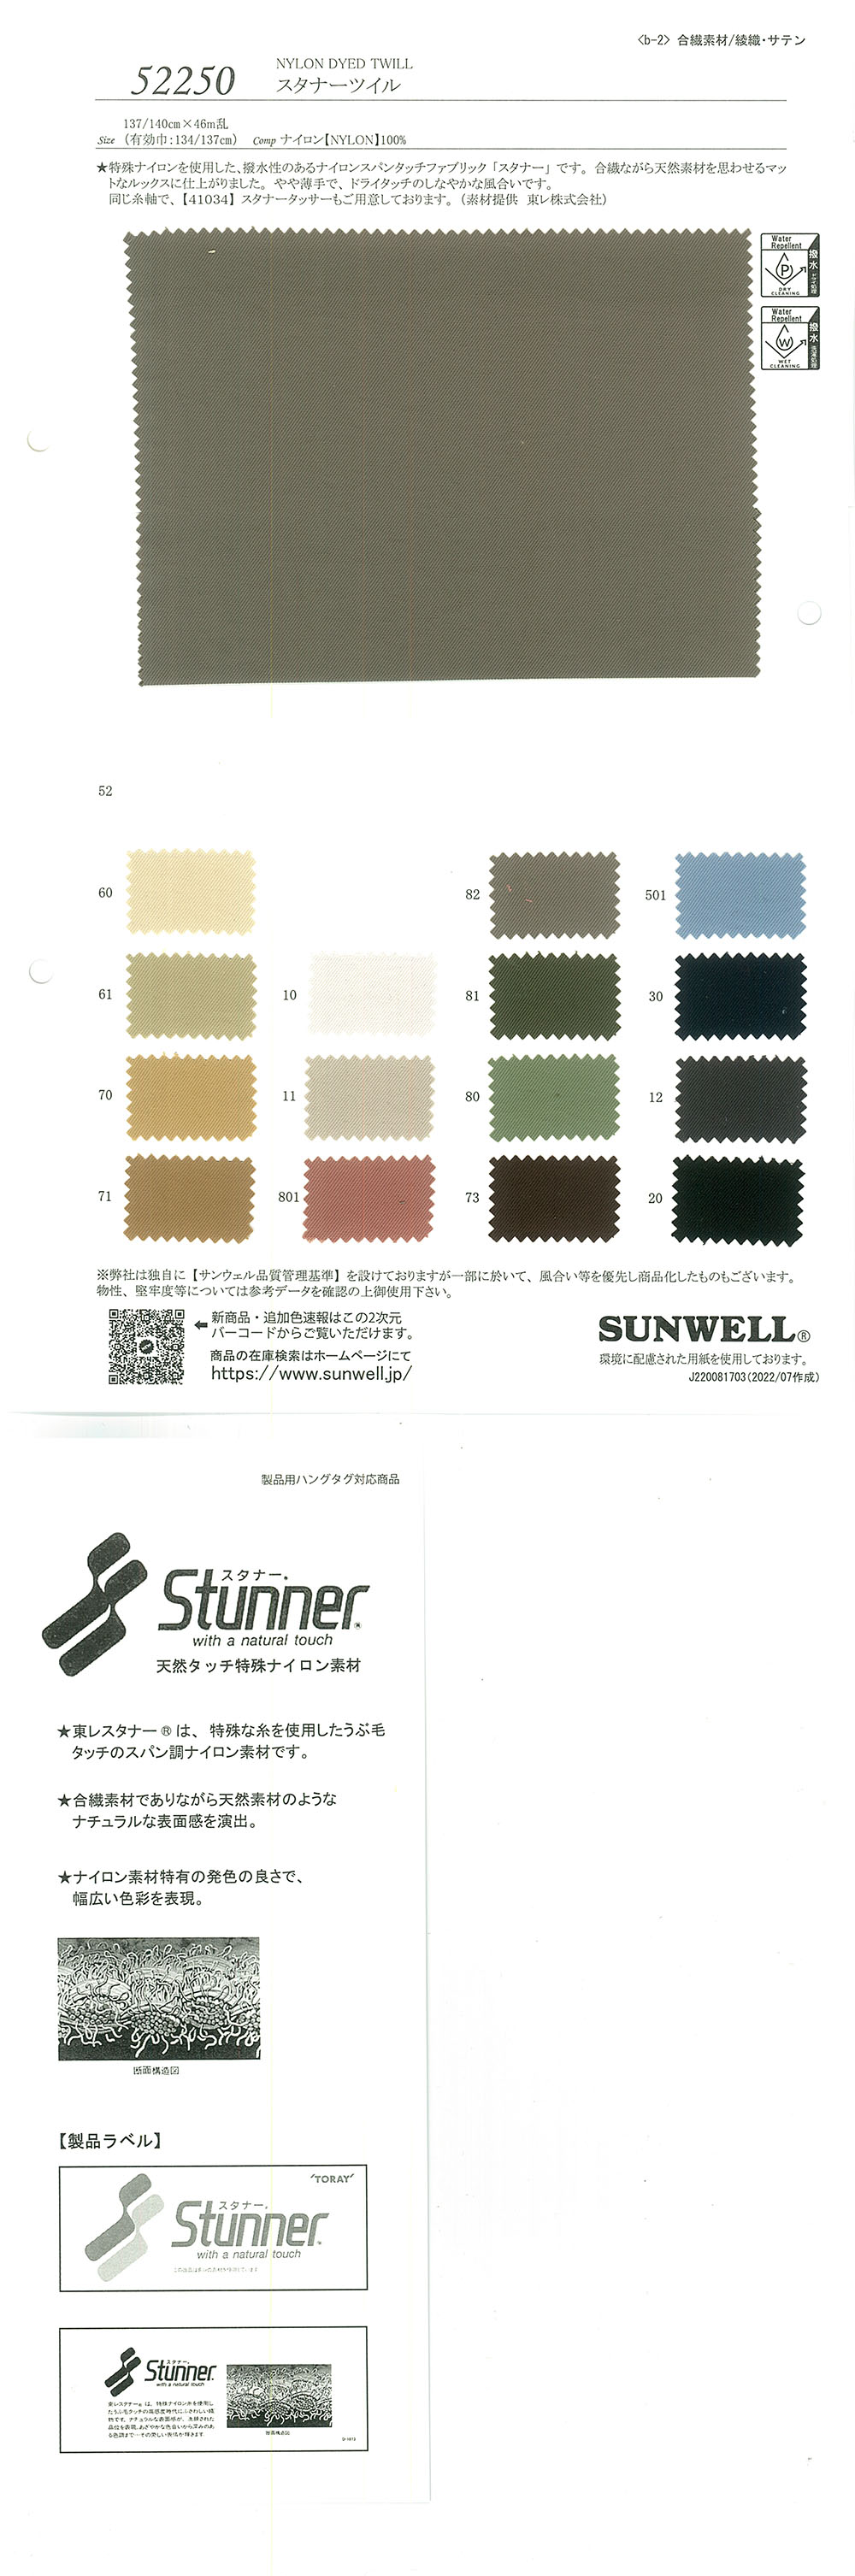 52250 Stunner Twill[Textile / Fabric] SUNWELL